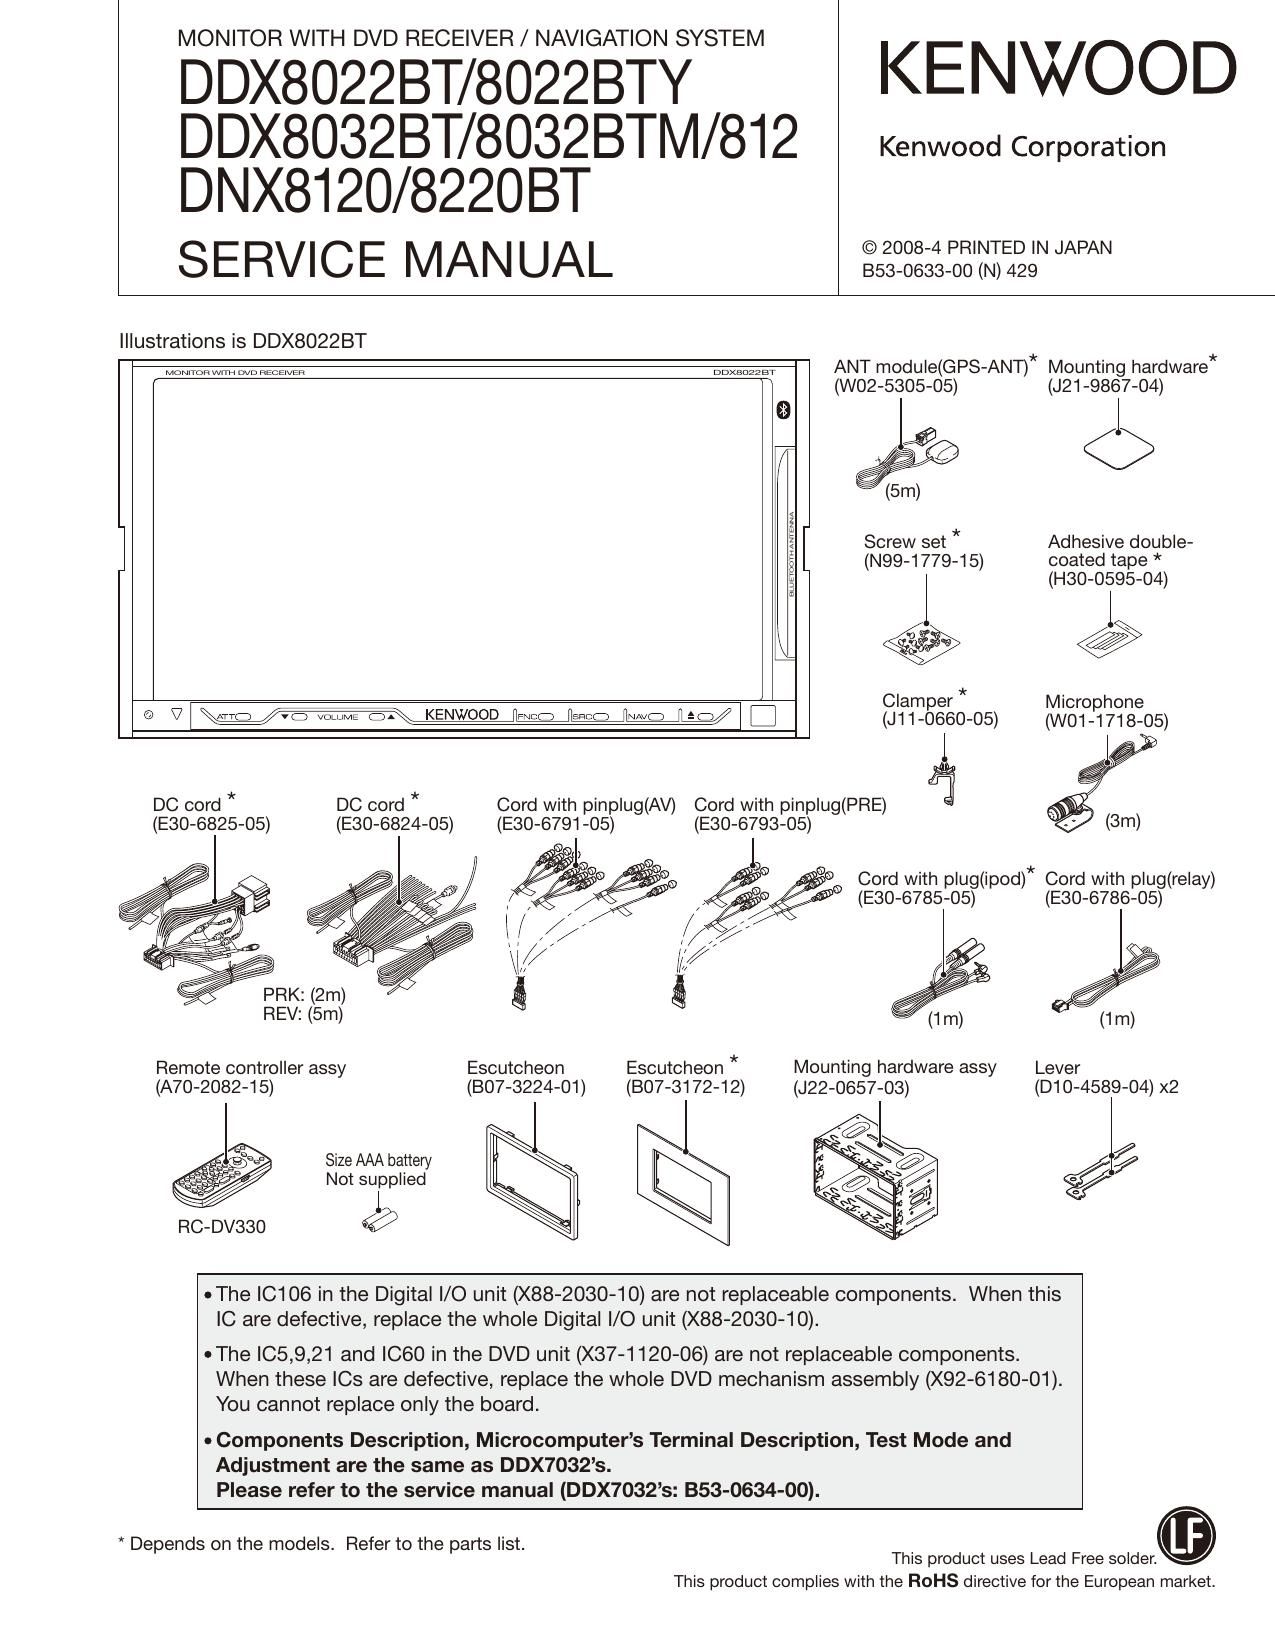 Kenwood DDX 812 HU Service Manual